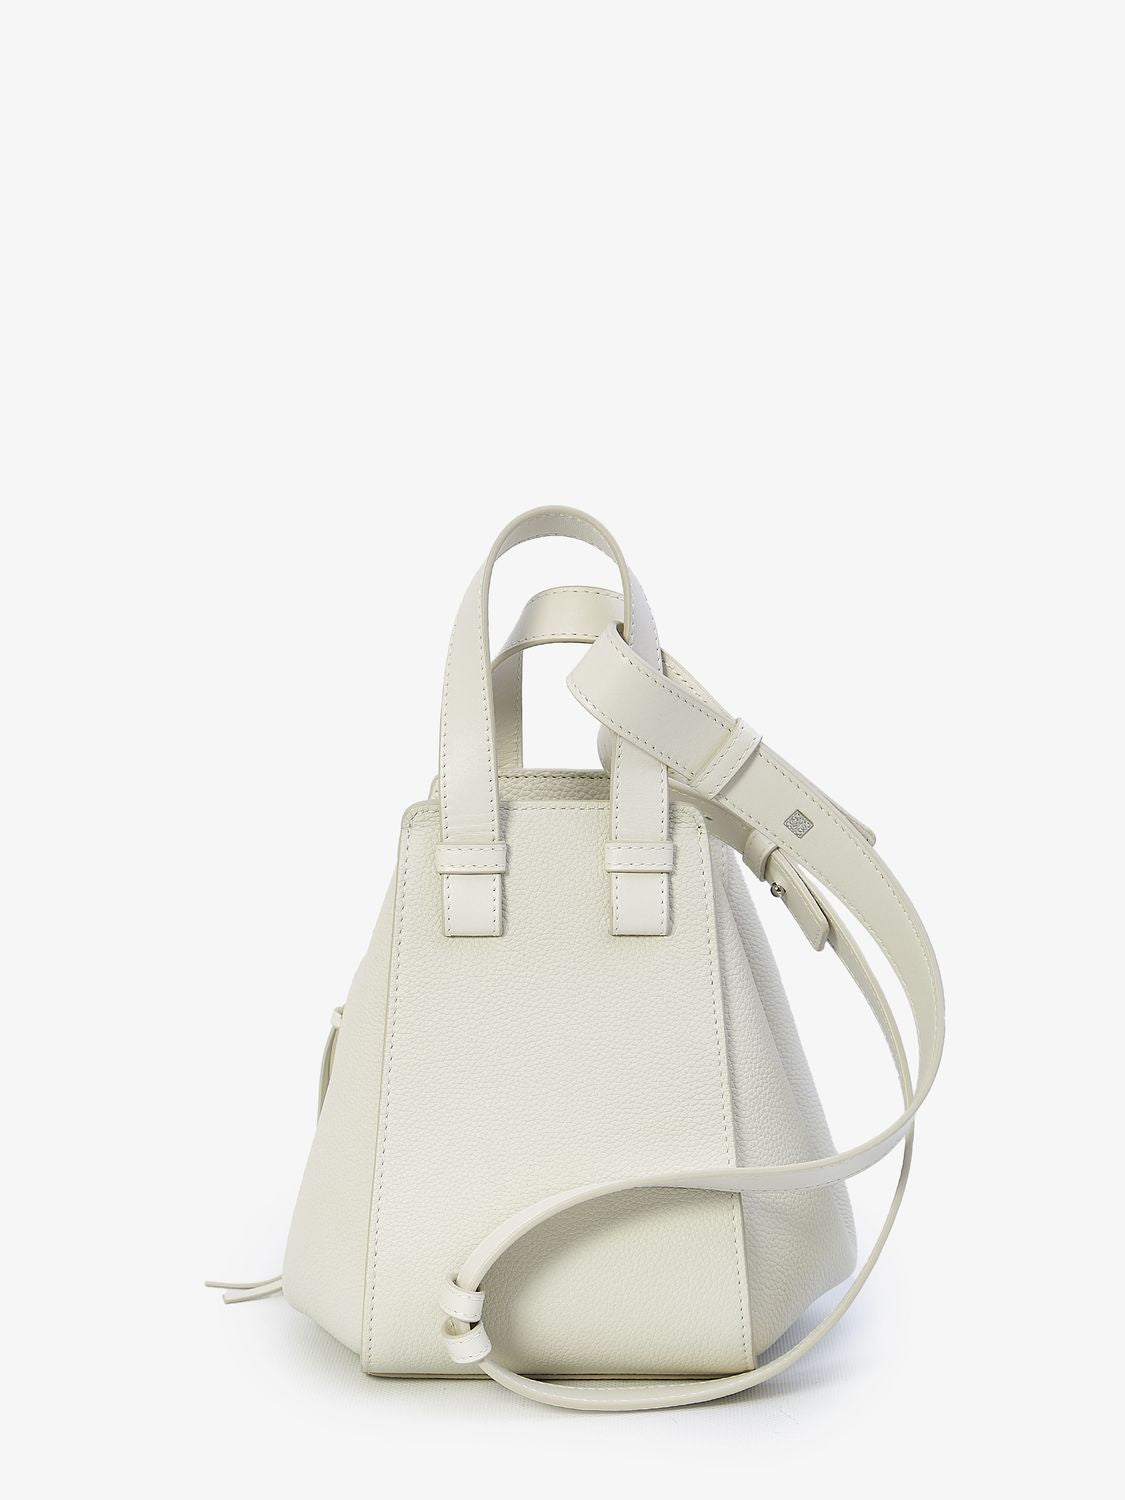 LOEWE Compact Hammock Handbag in Soft White Grained Calfskin with Embossed Anagram for Women